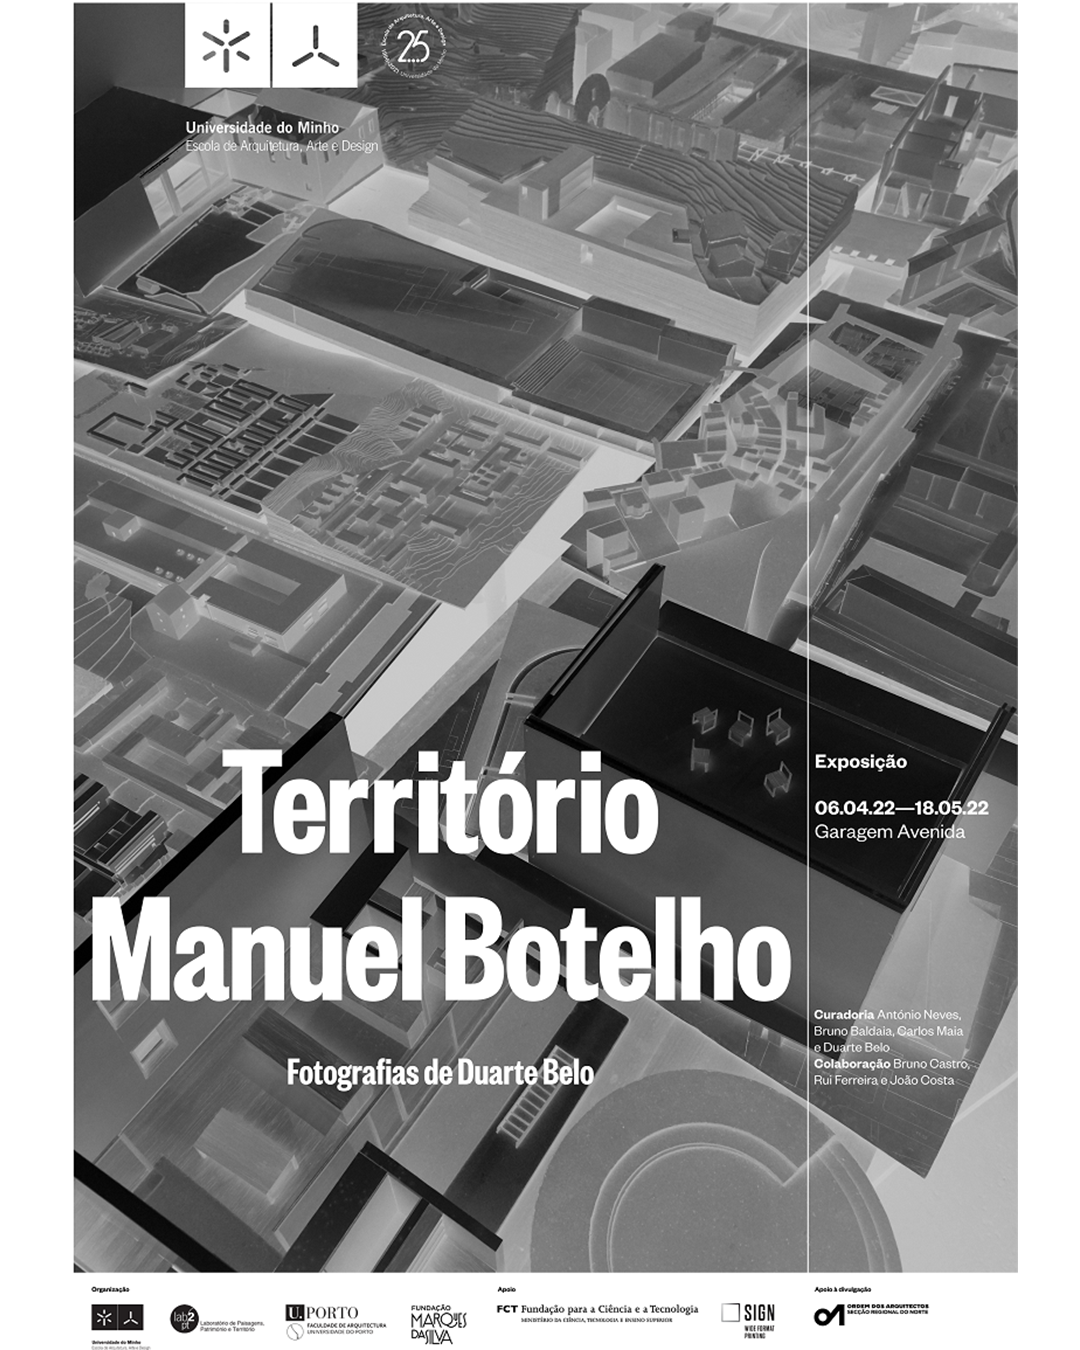 ‘Território Manuel Botelho’ image